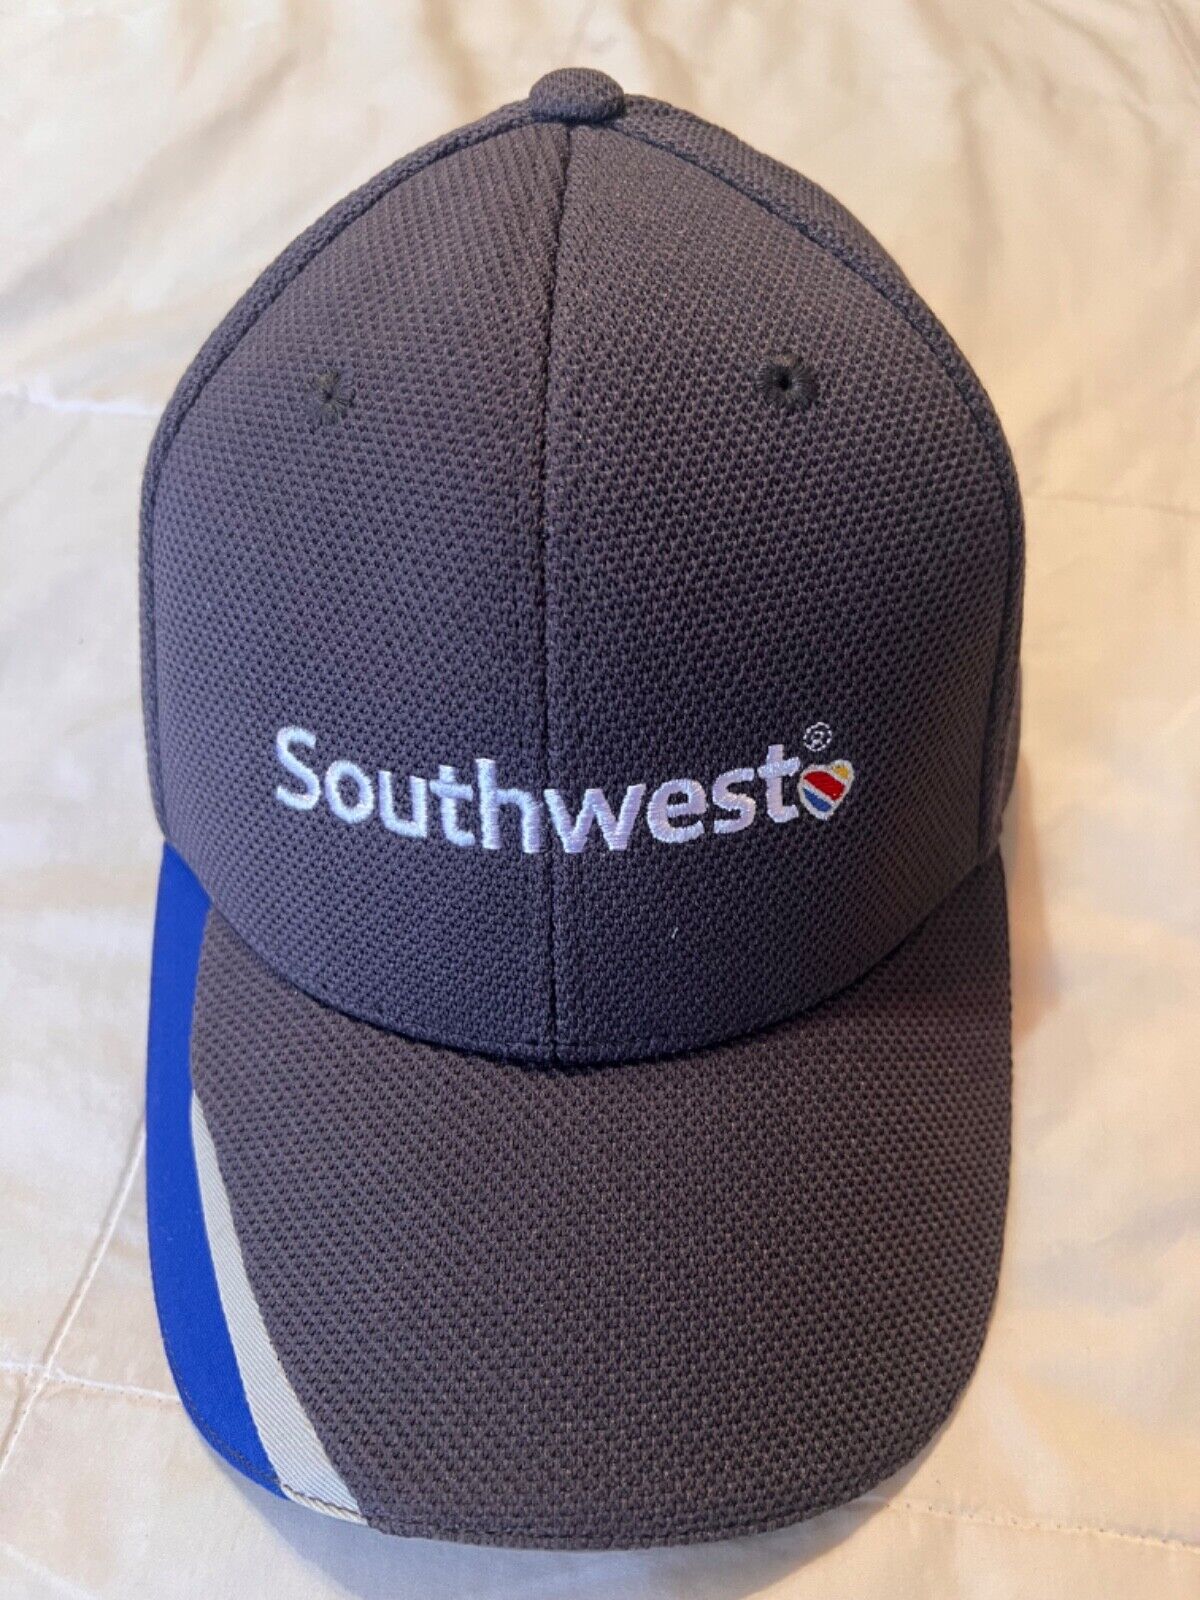 Southwest Airlines Uniform Baseball Hat Cap Brand New